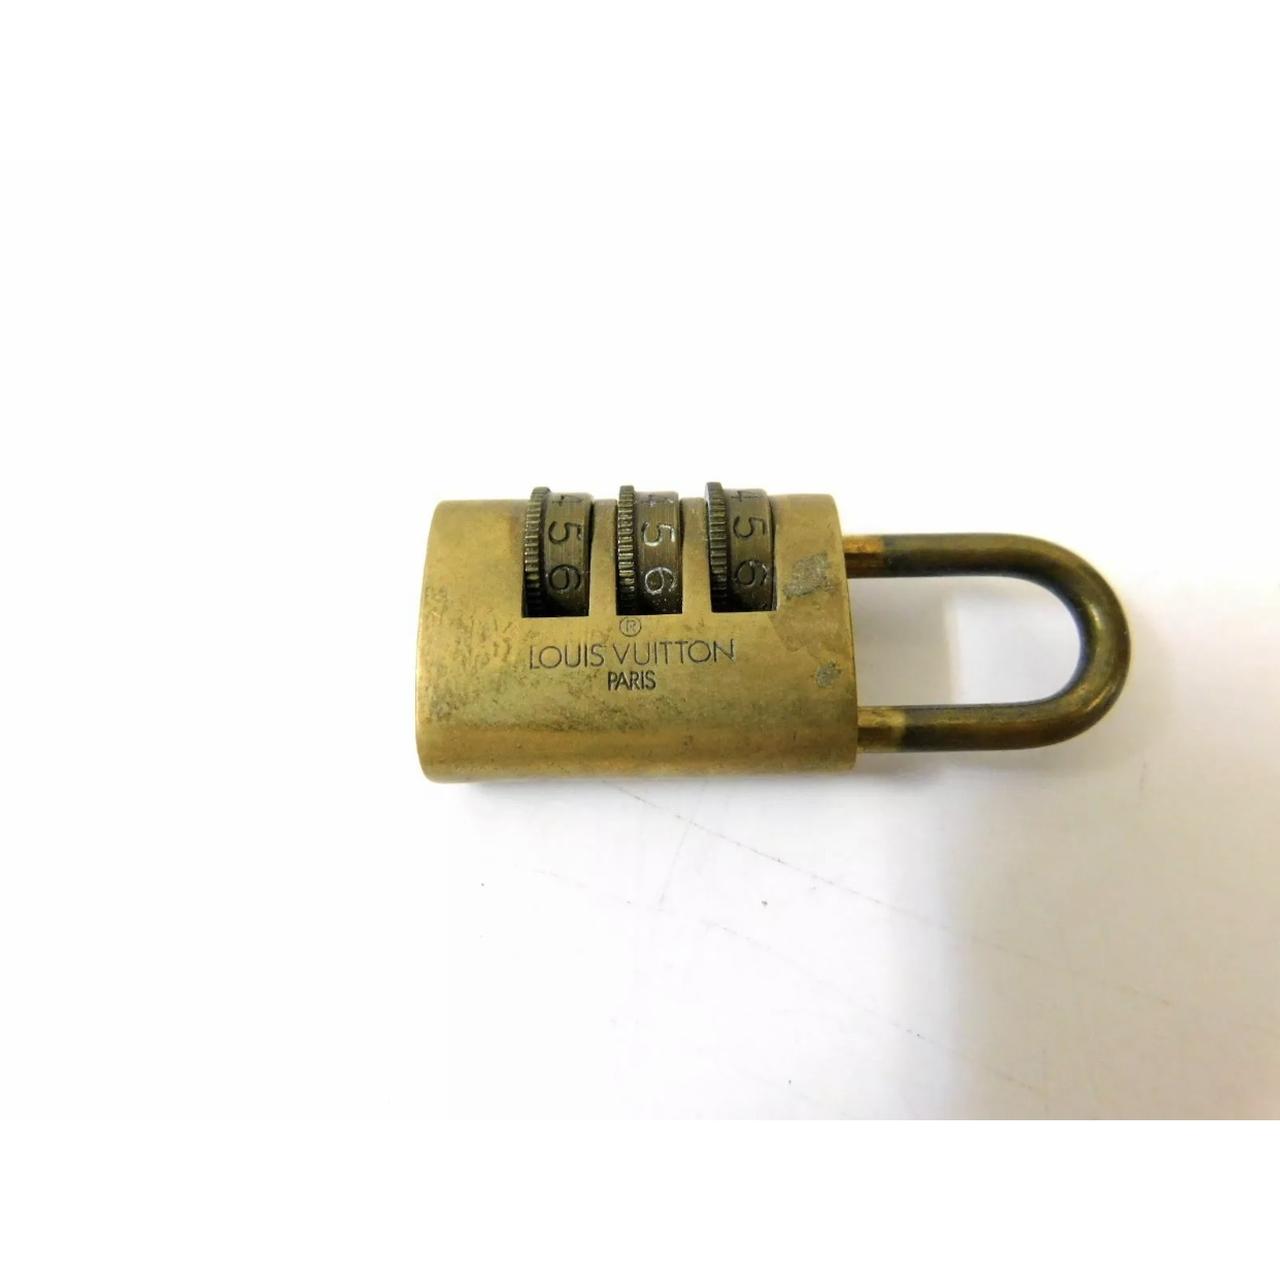 EB-157 #306 #319 Authentic LOUIS VUITTON Lock & Key Padlock